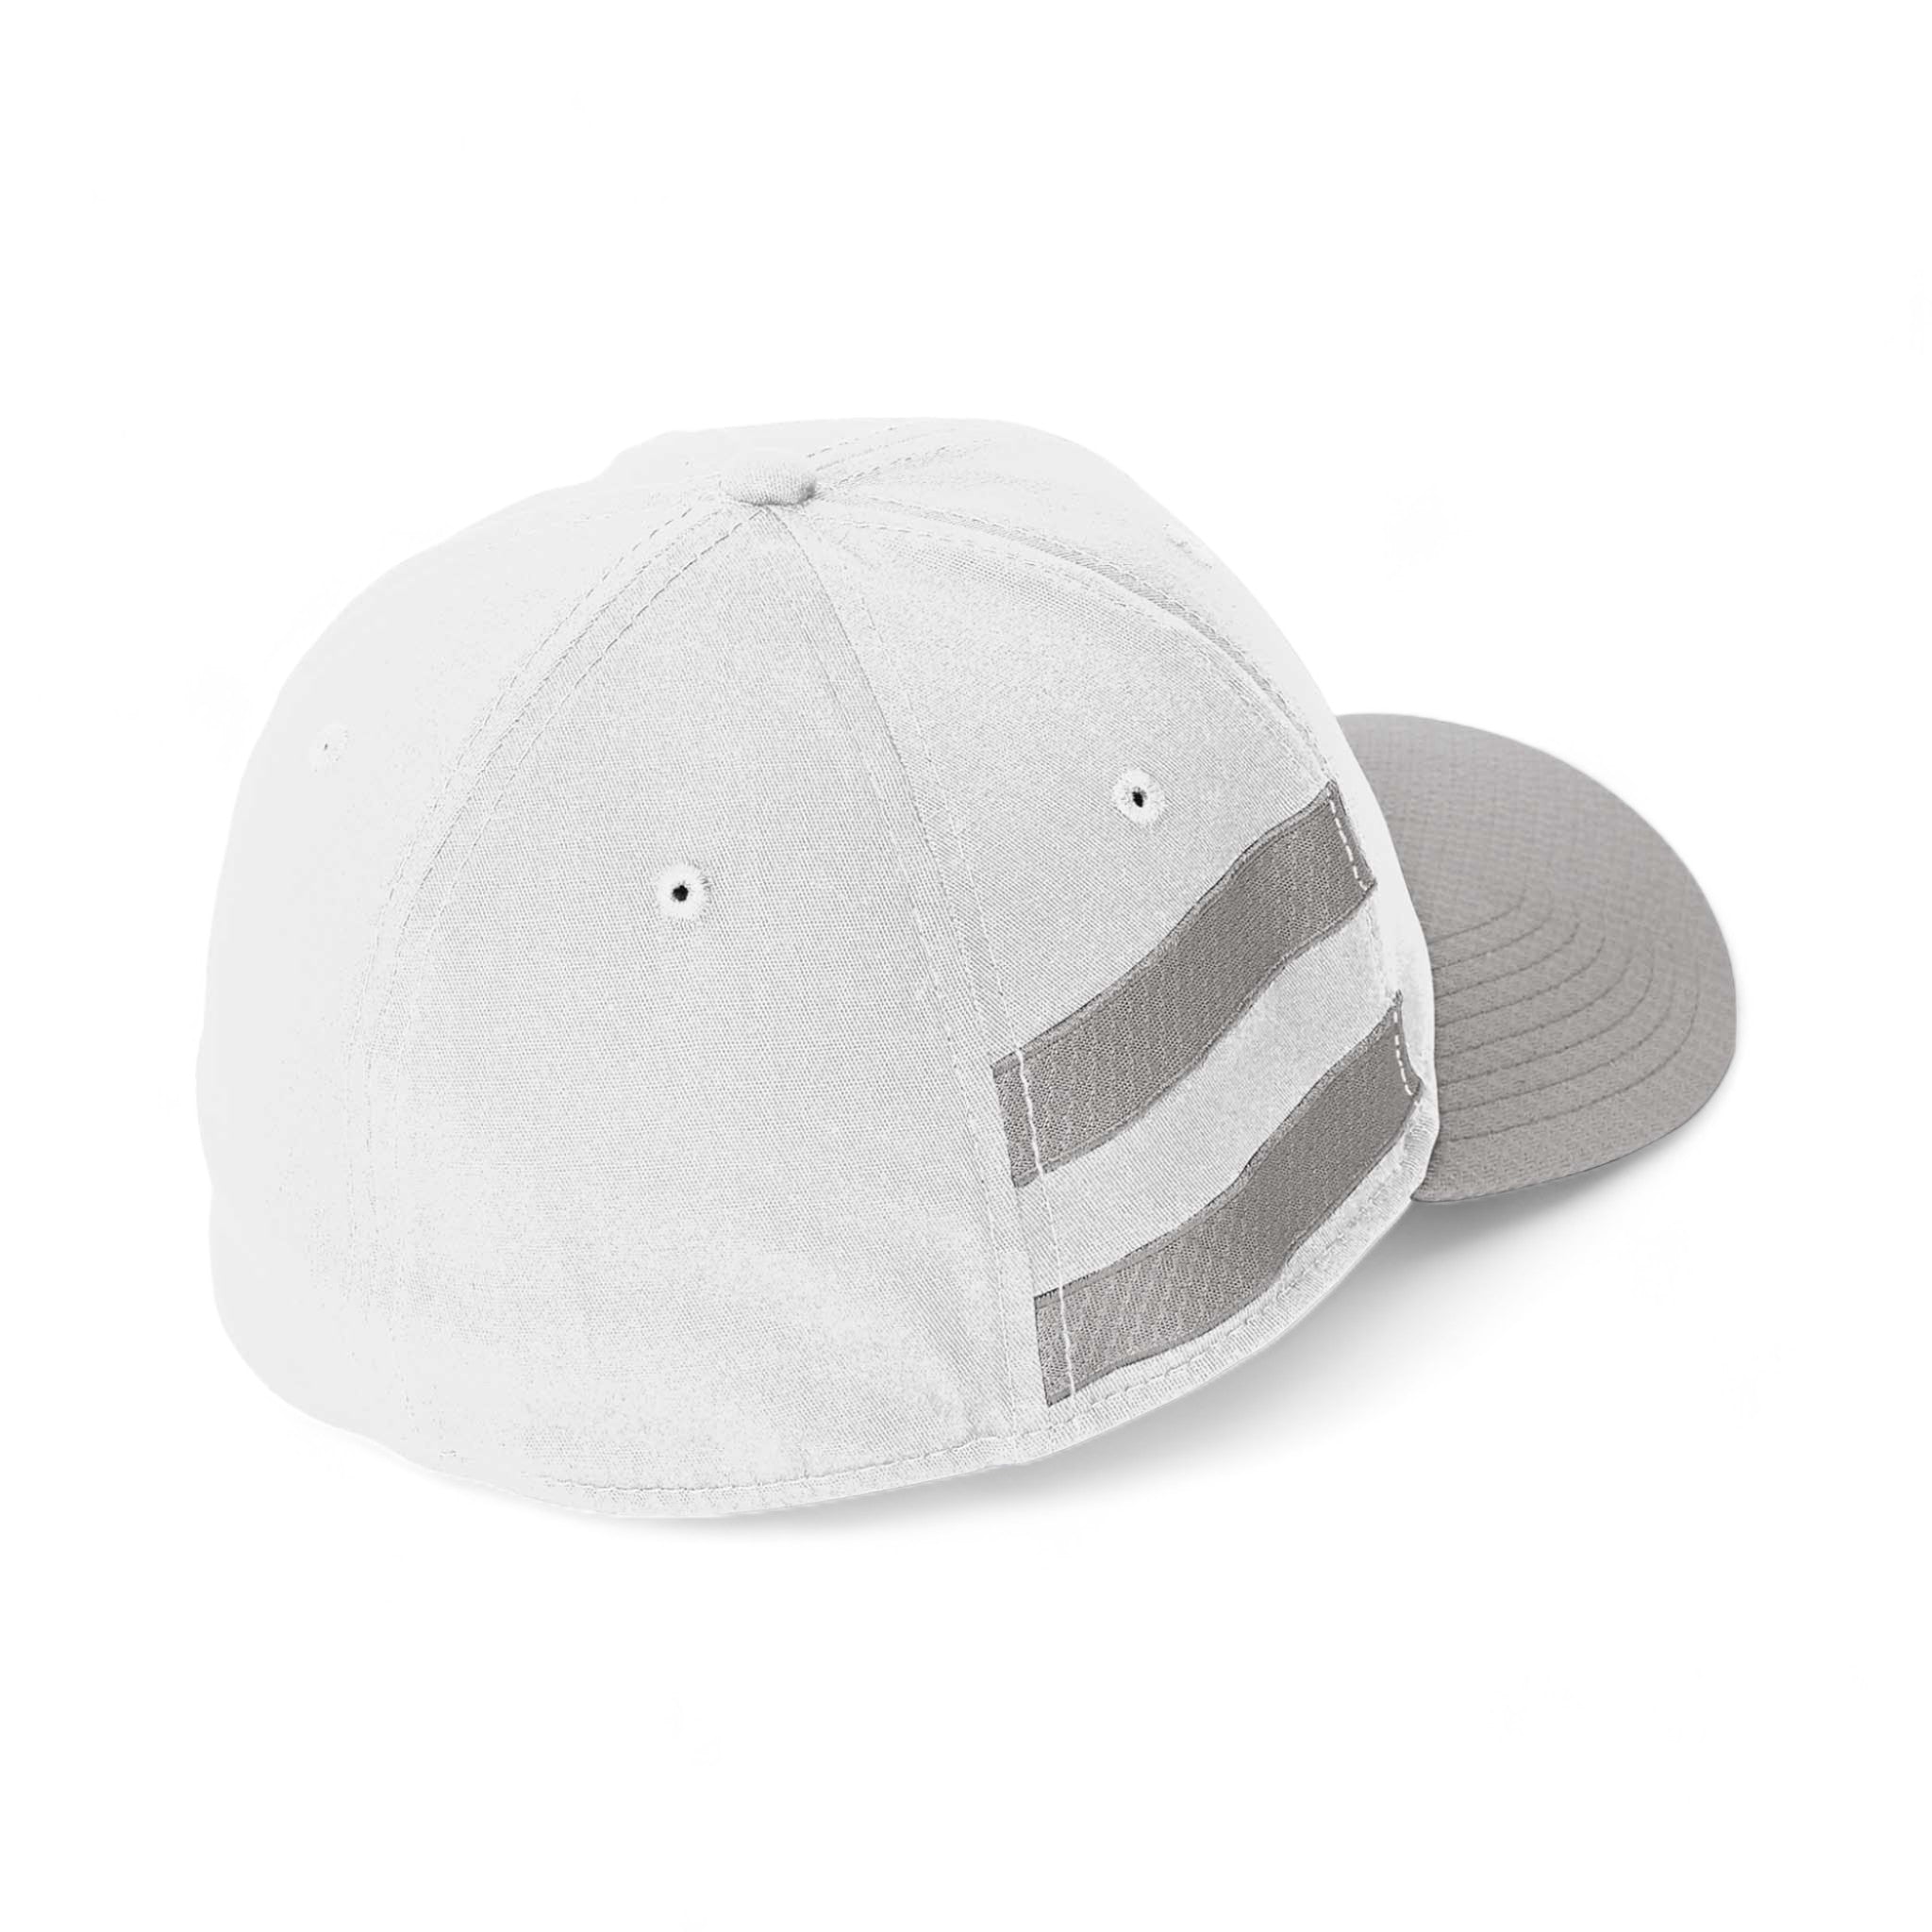 Back view of New Era NE1122 custom hat in white and grey